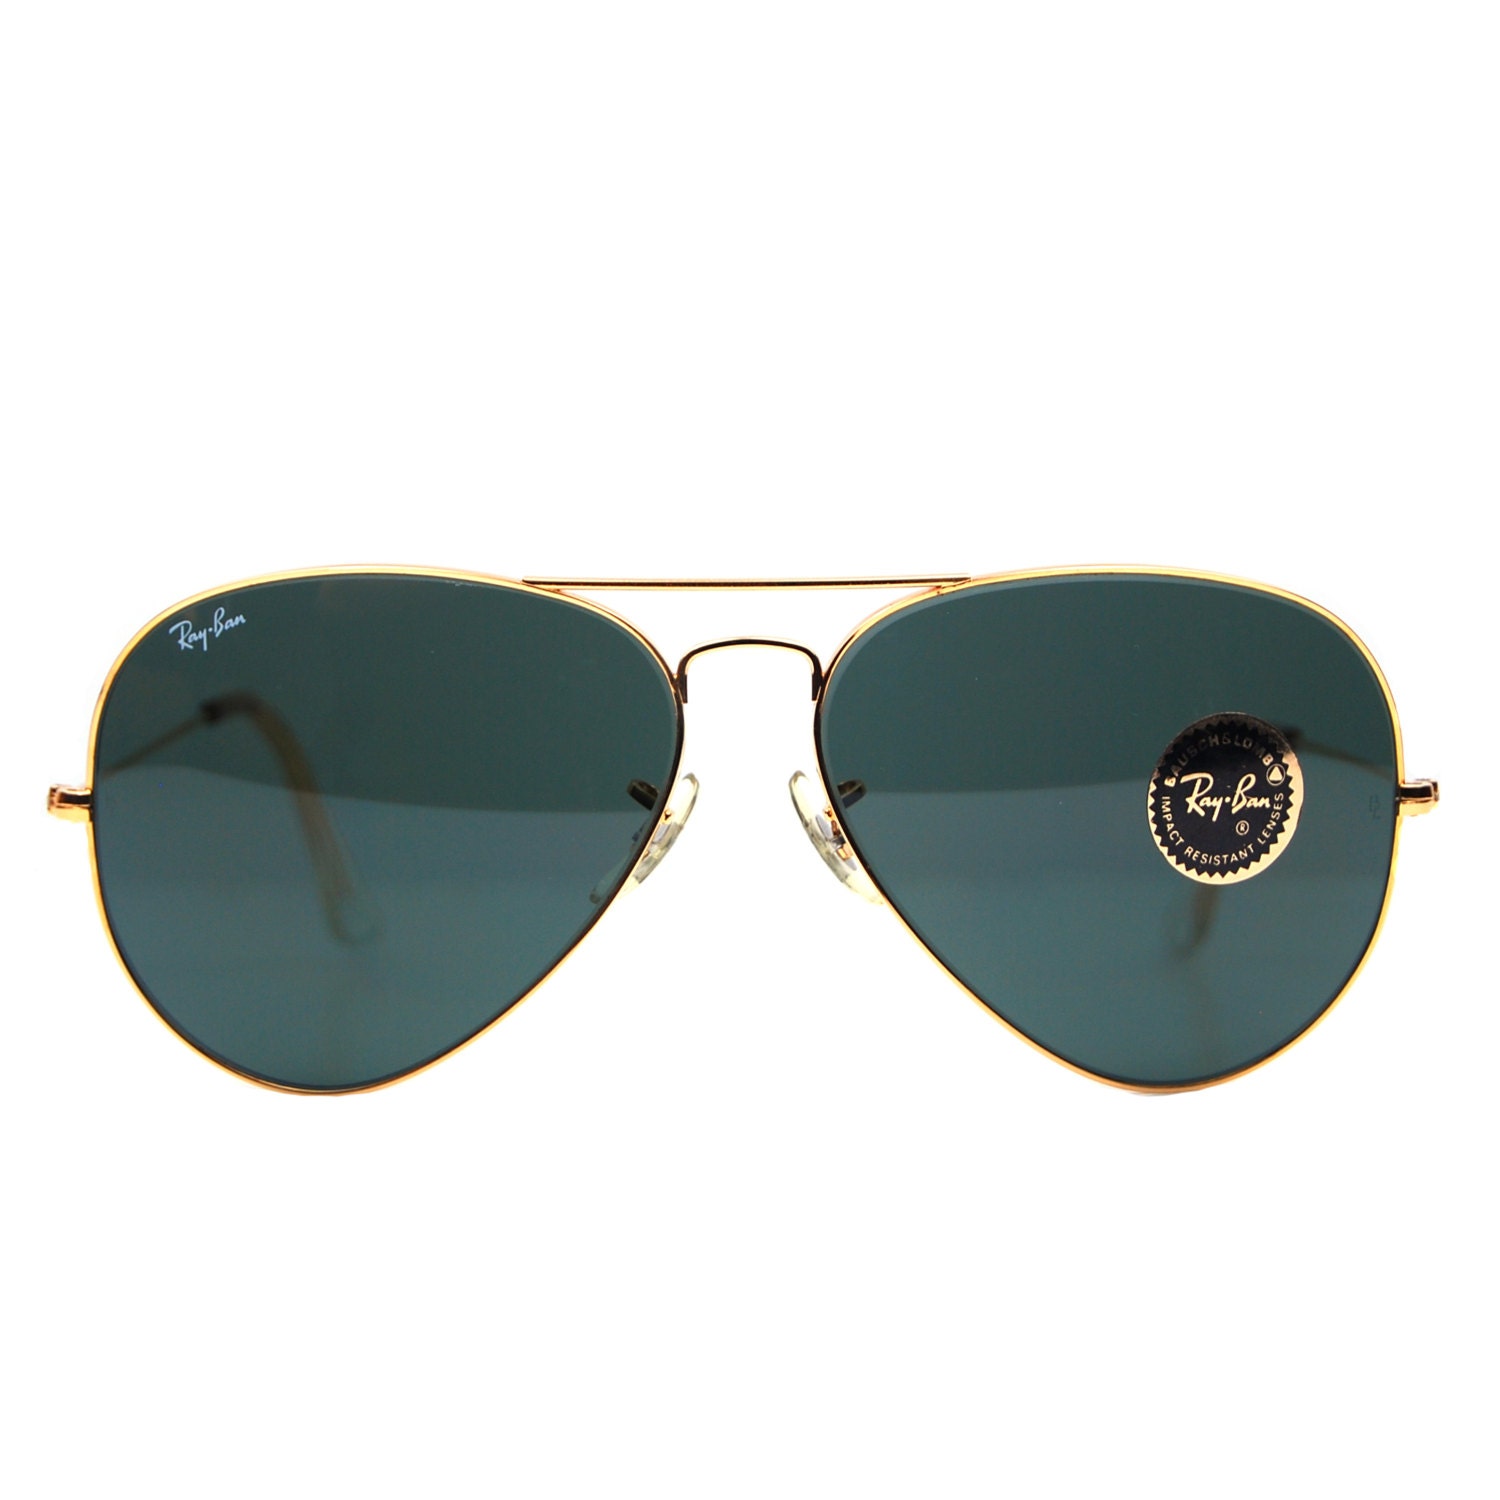 Vintage Ray Ban B&L Aviators Sunglasses 62 mm